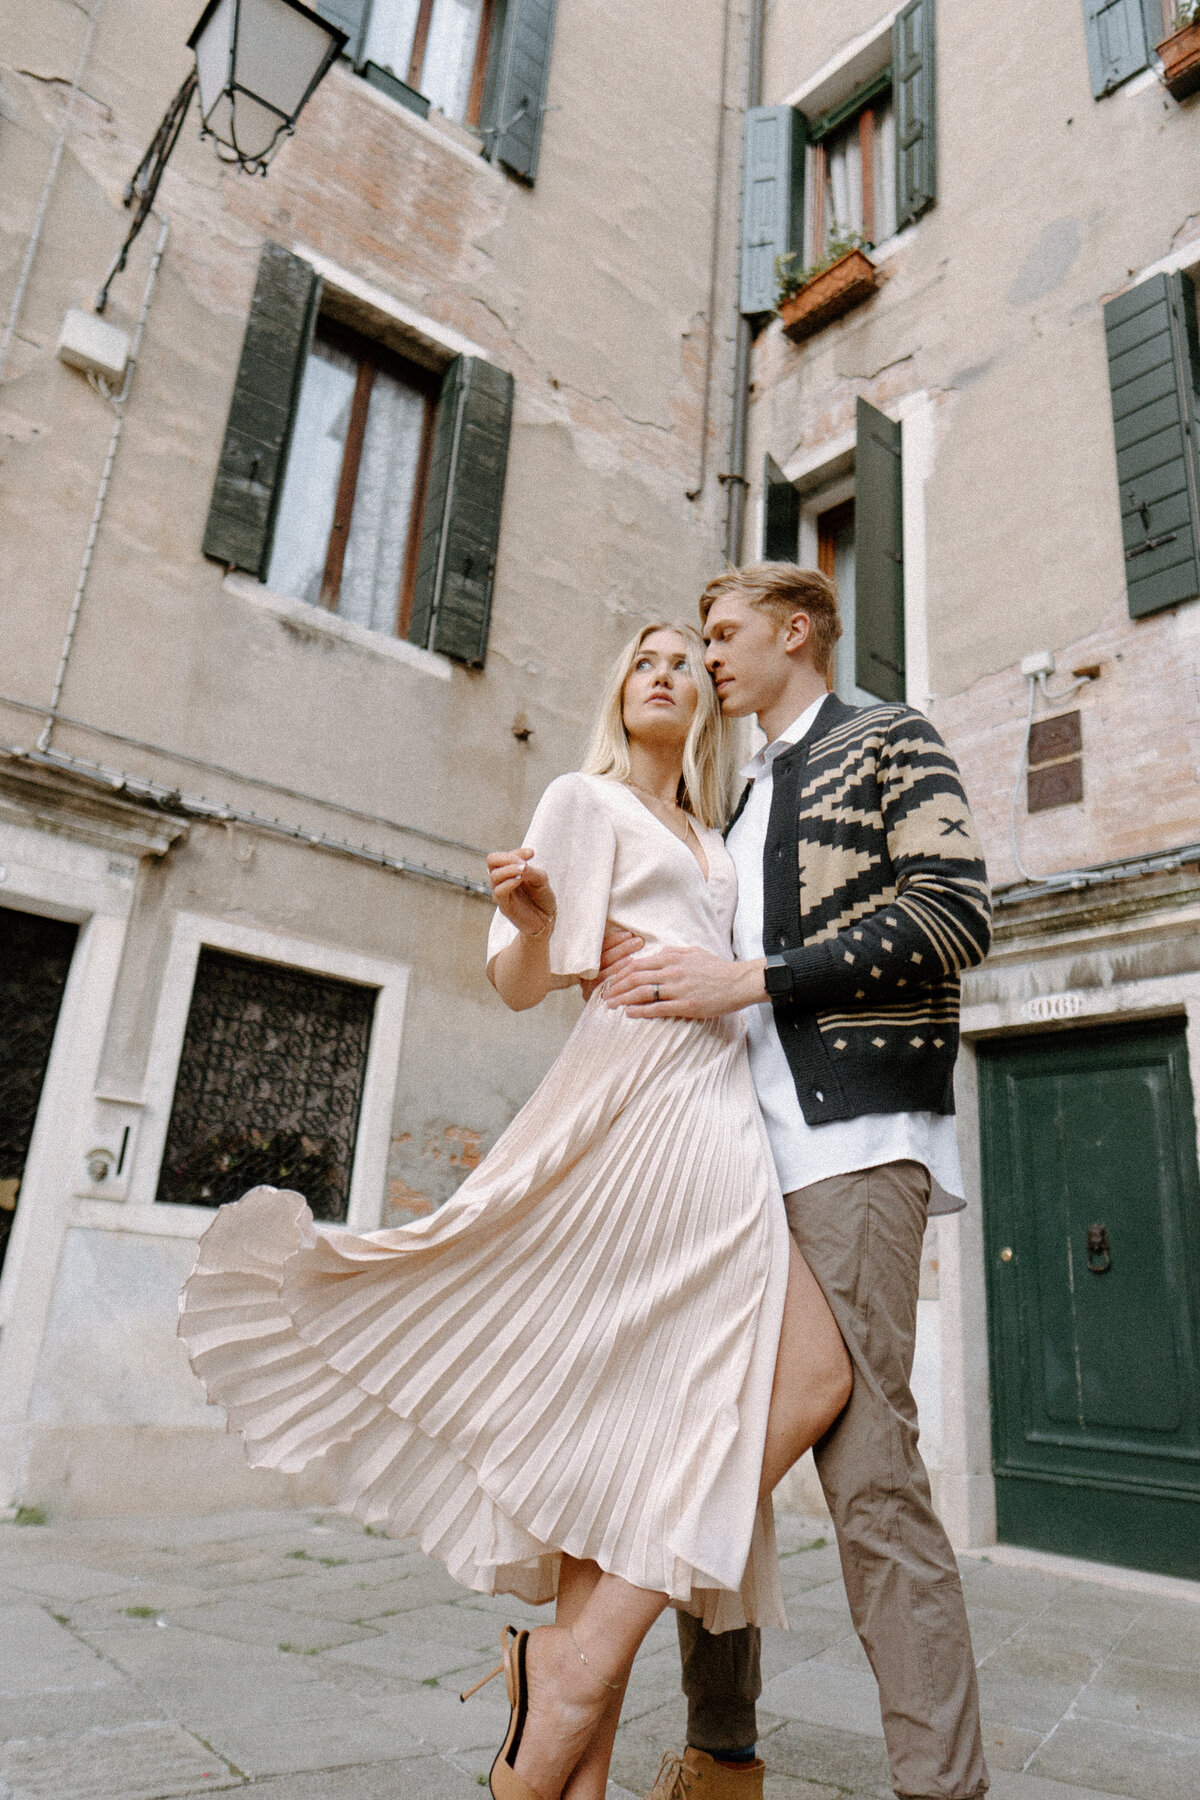 Documentary-Style-Editorial-Vogue-Italy-Destination-Wedding-Leah-Gunn-Photography-6